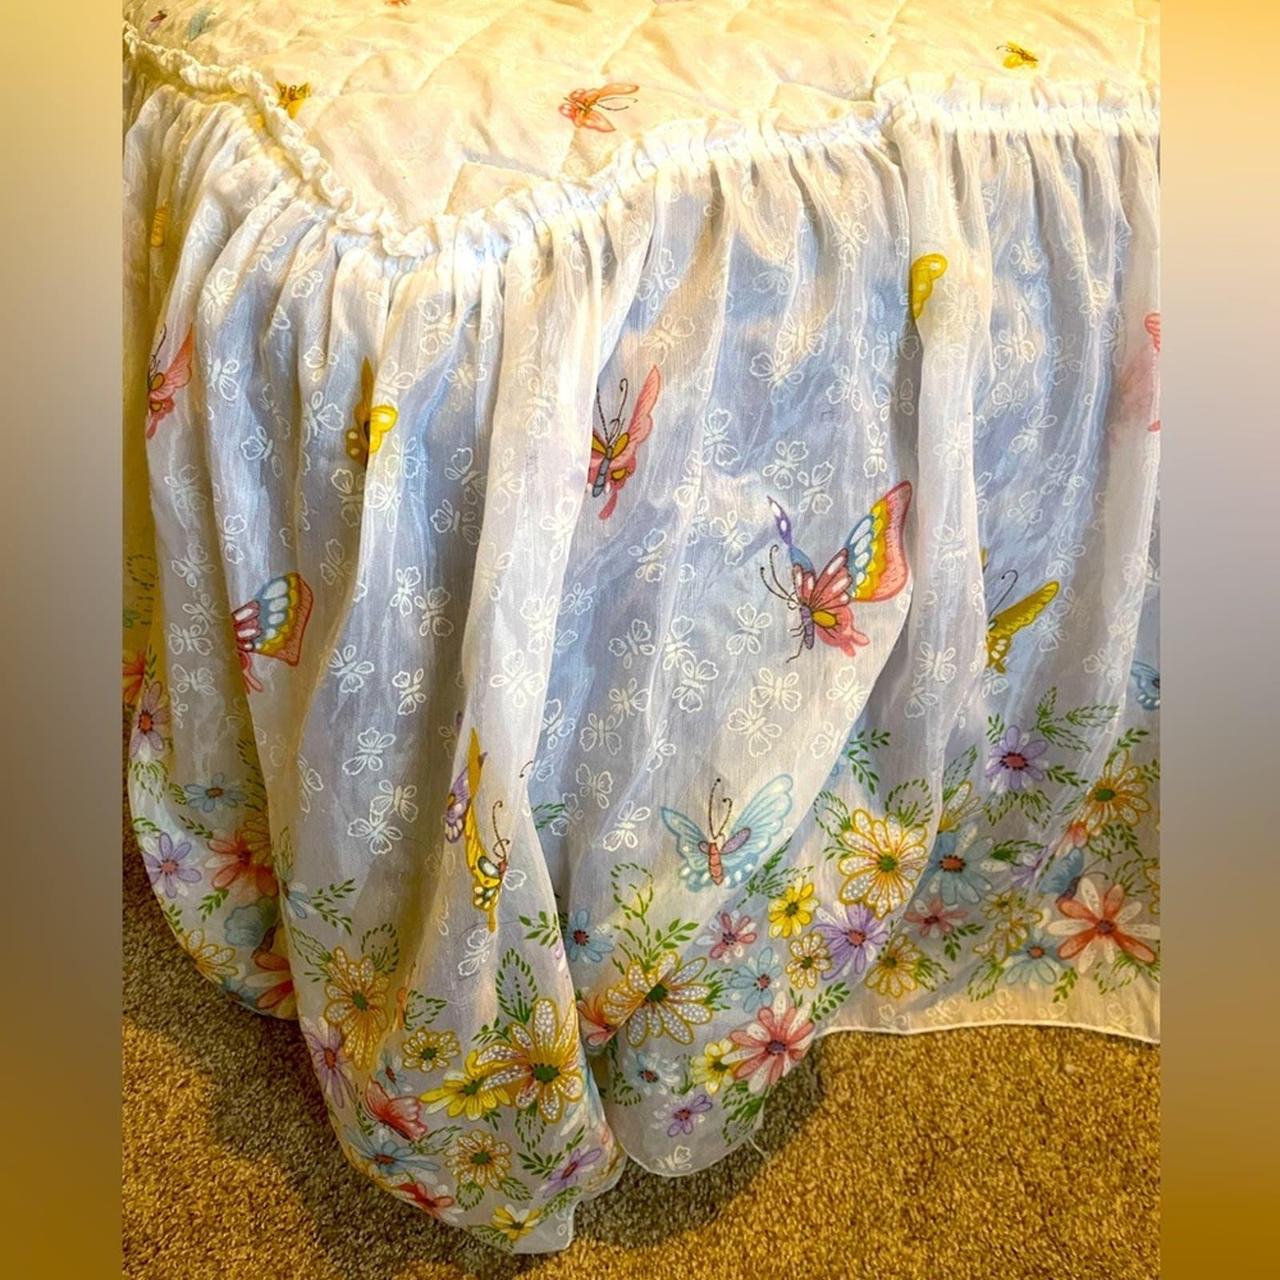 Vintage Barbie Tapestry Blanket 💗✨ No flaws! - Depop